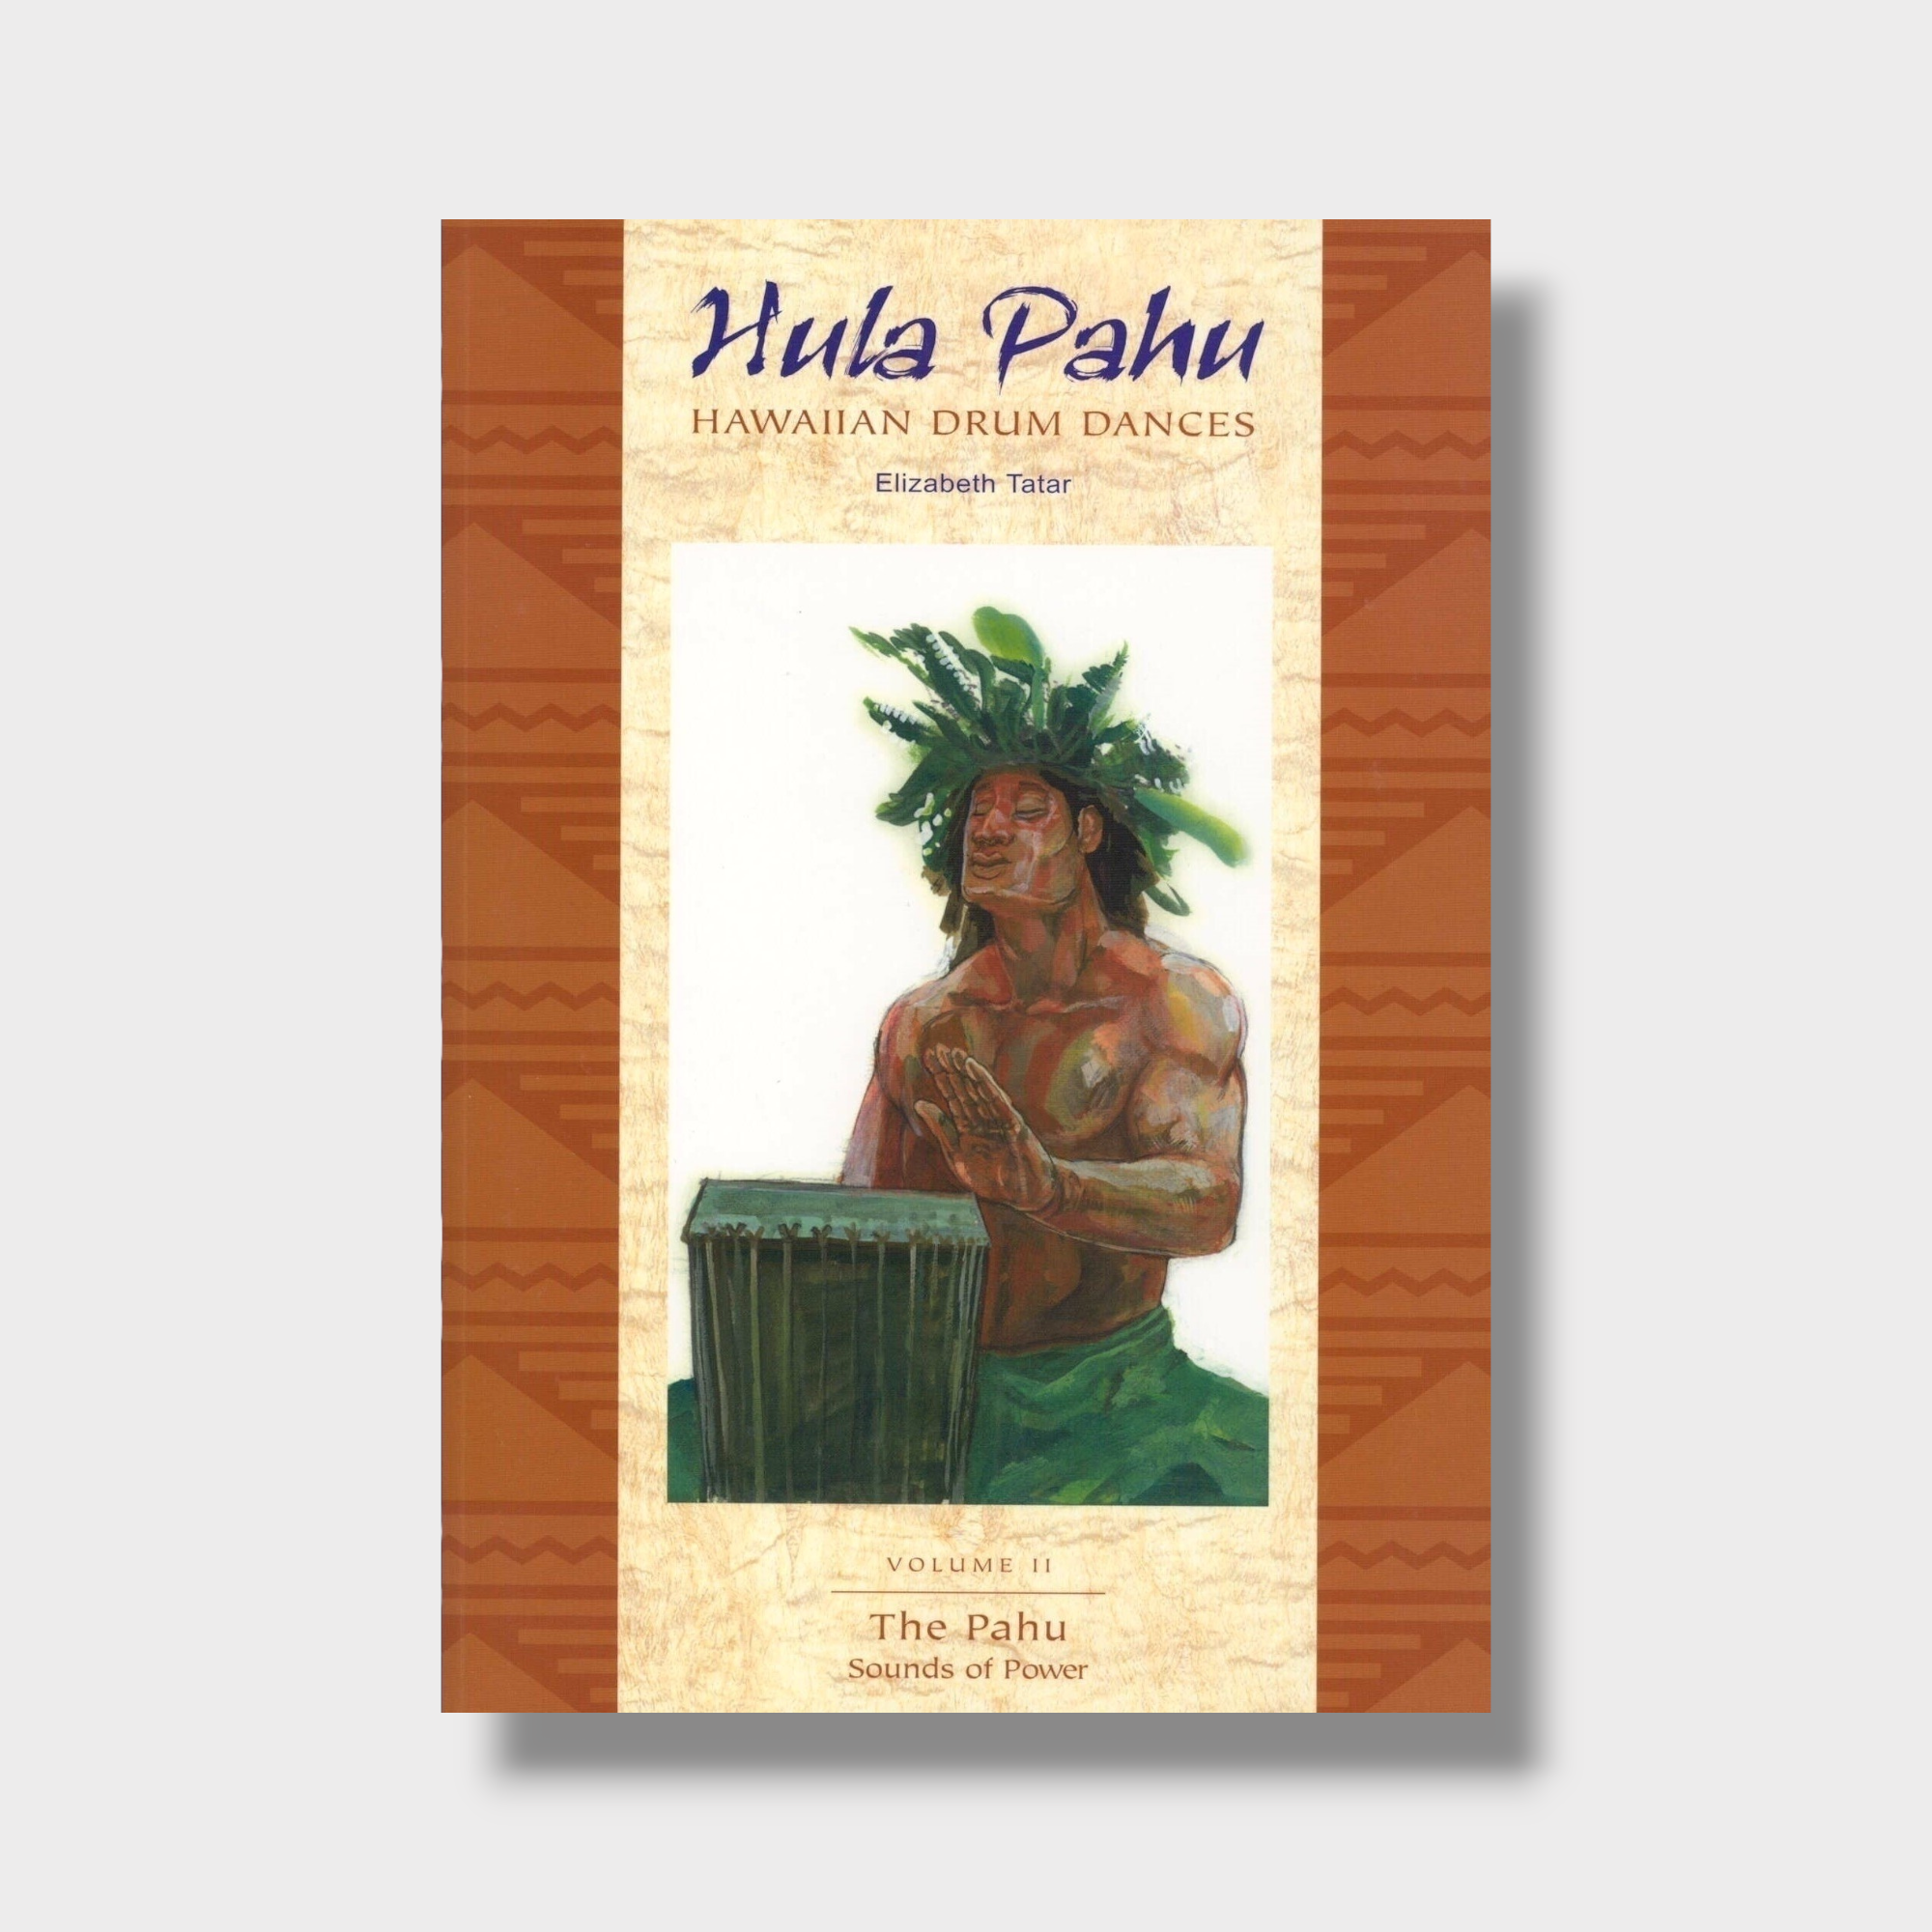 Hula Pahu, Hawaiian Drum Dances, Volume II: The Pahu, Sounds of Power